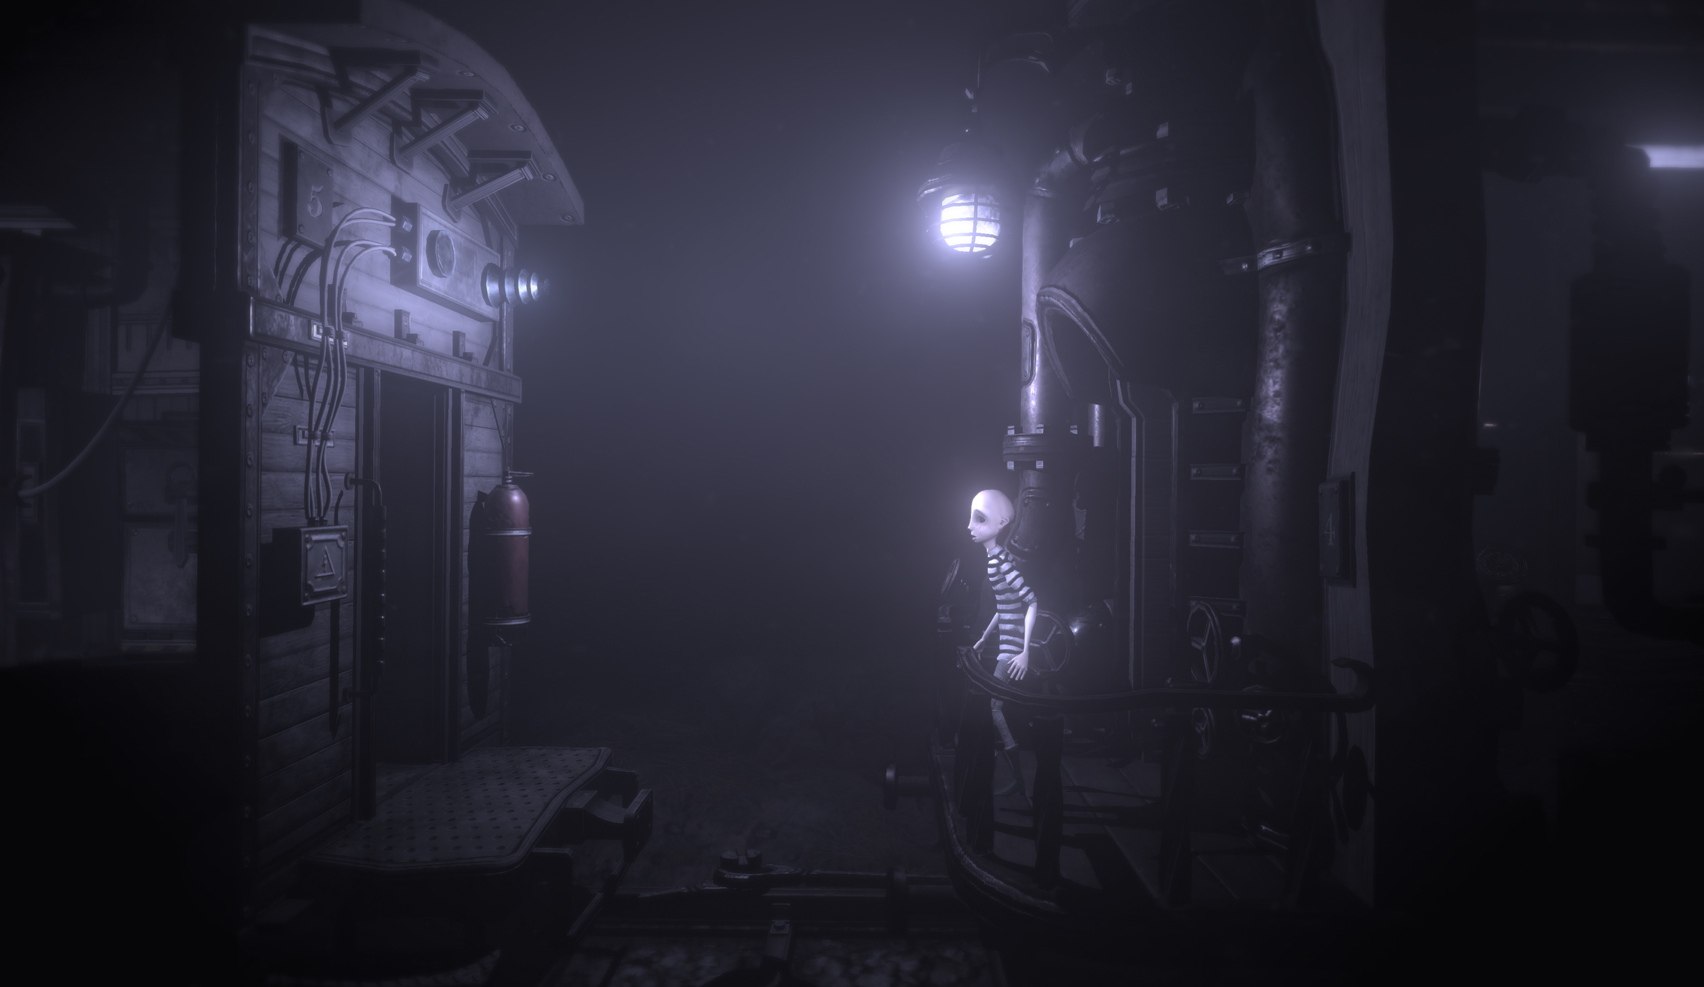 ghost trick phantom detective platforms download